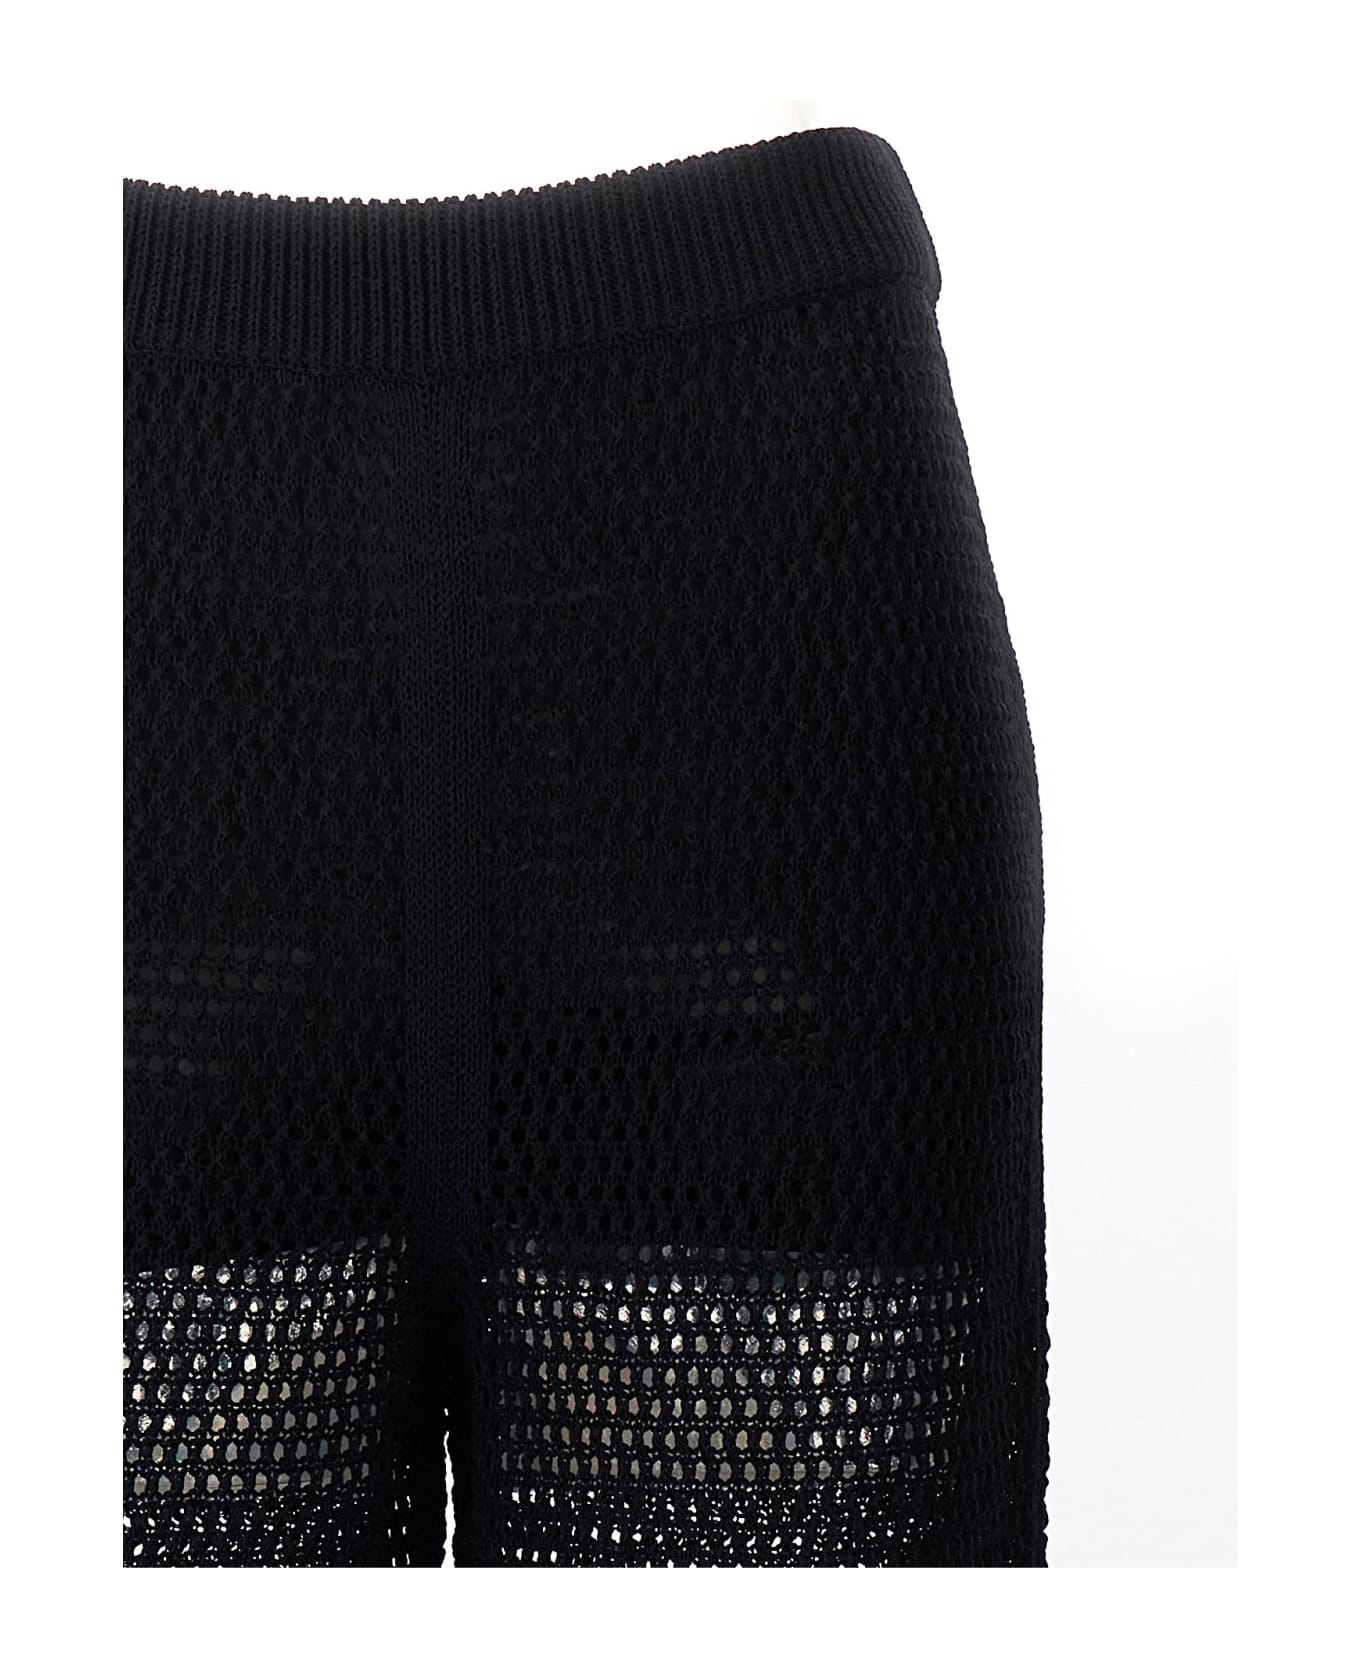 M05CH1N0 Jeans Crochet Pants - Black  